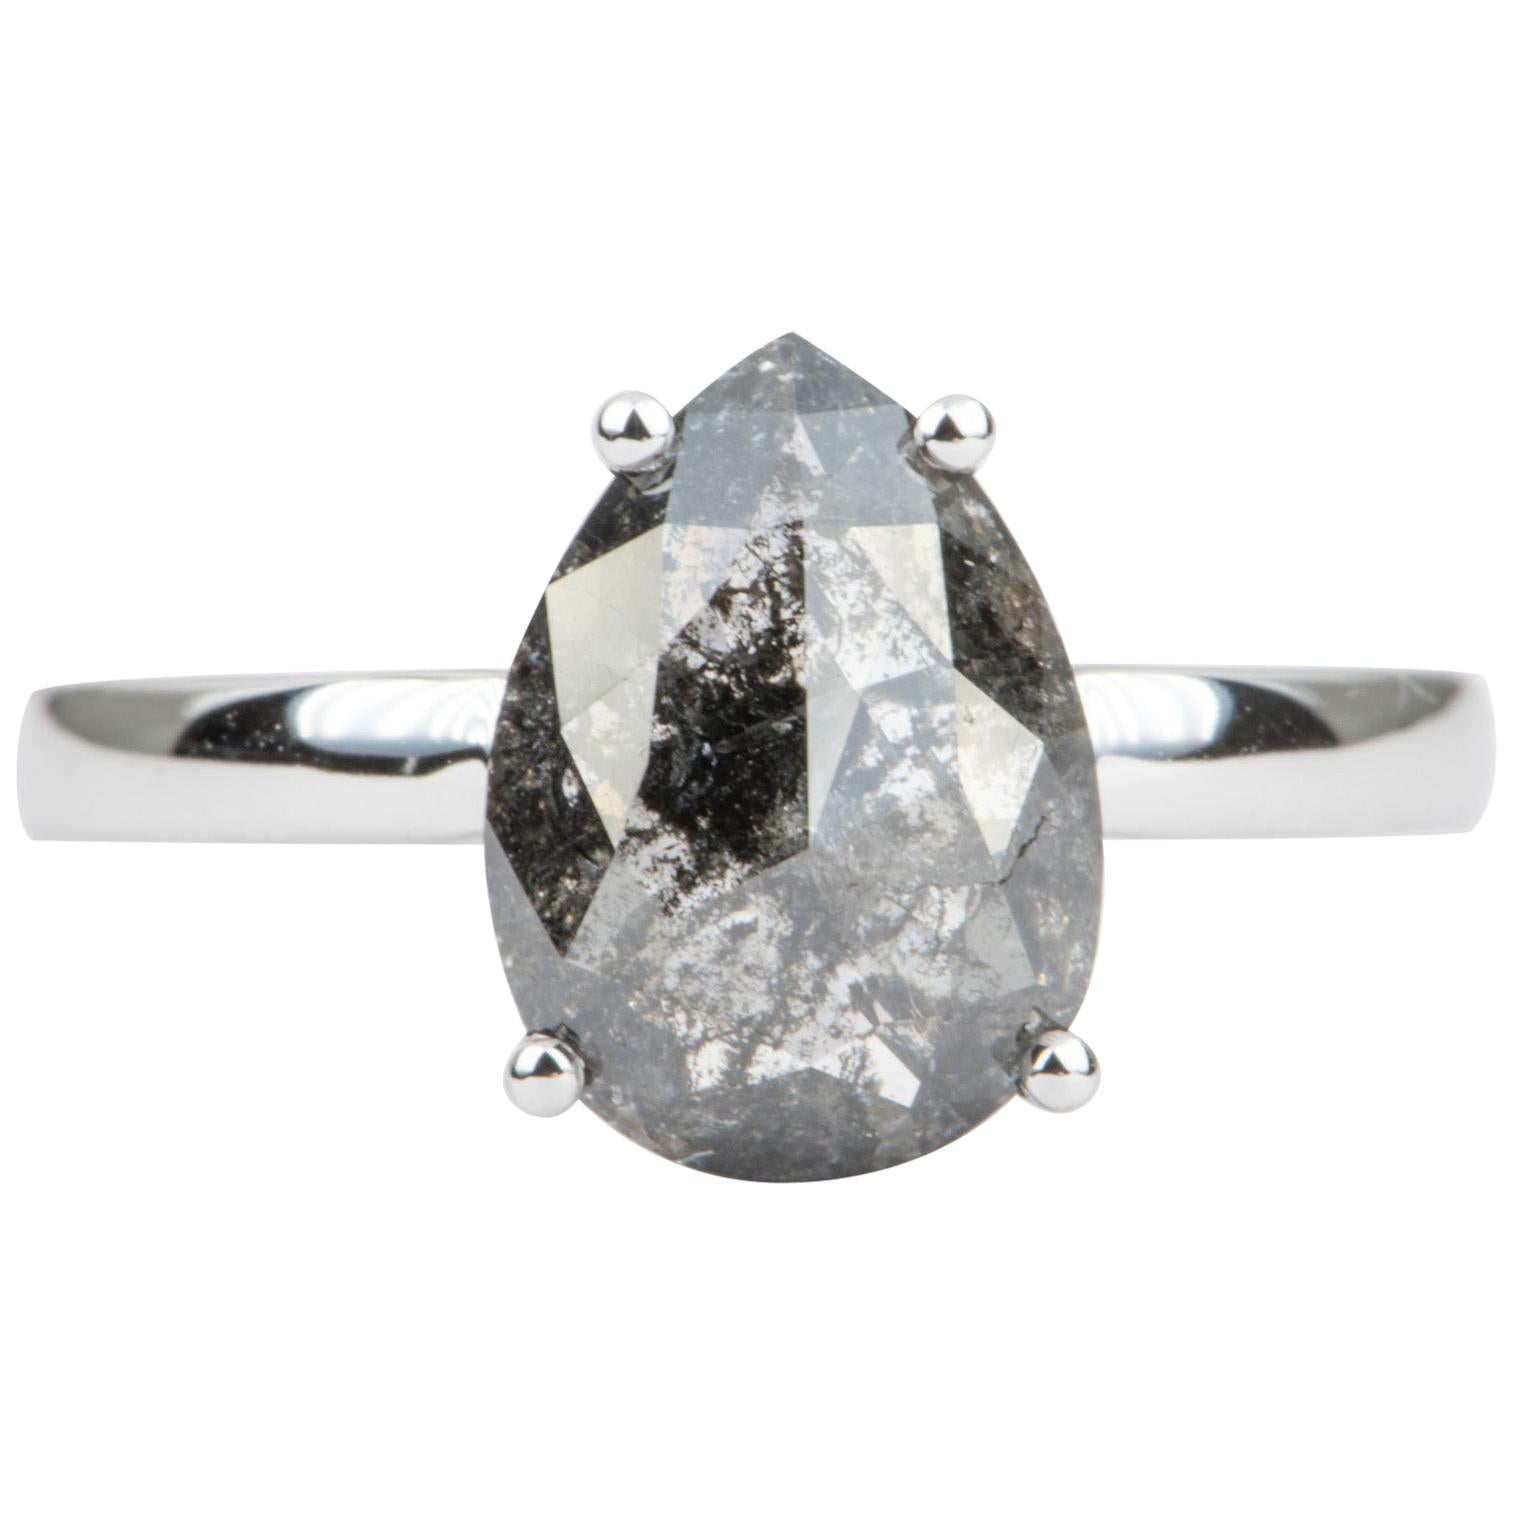 2.24 Carat Pear Shape Diamond Solitaire Engagement Ring 14 Karat Gold AD2021-5